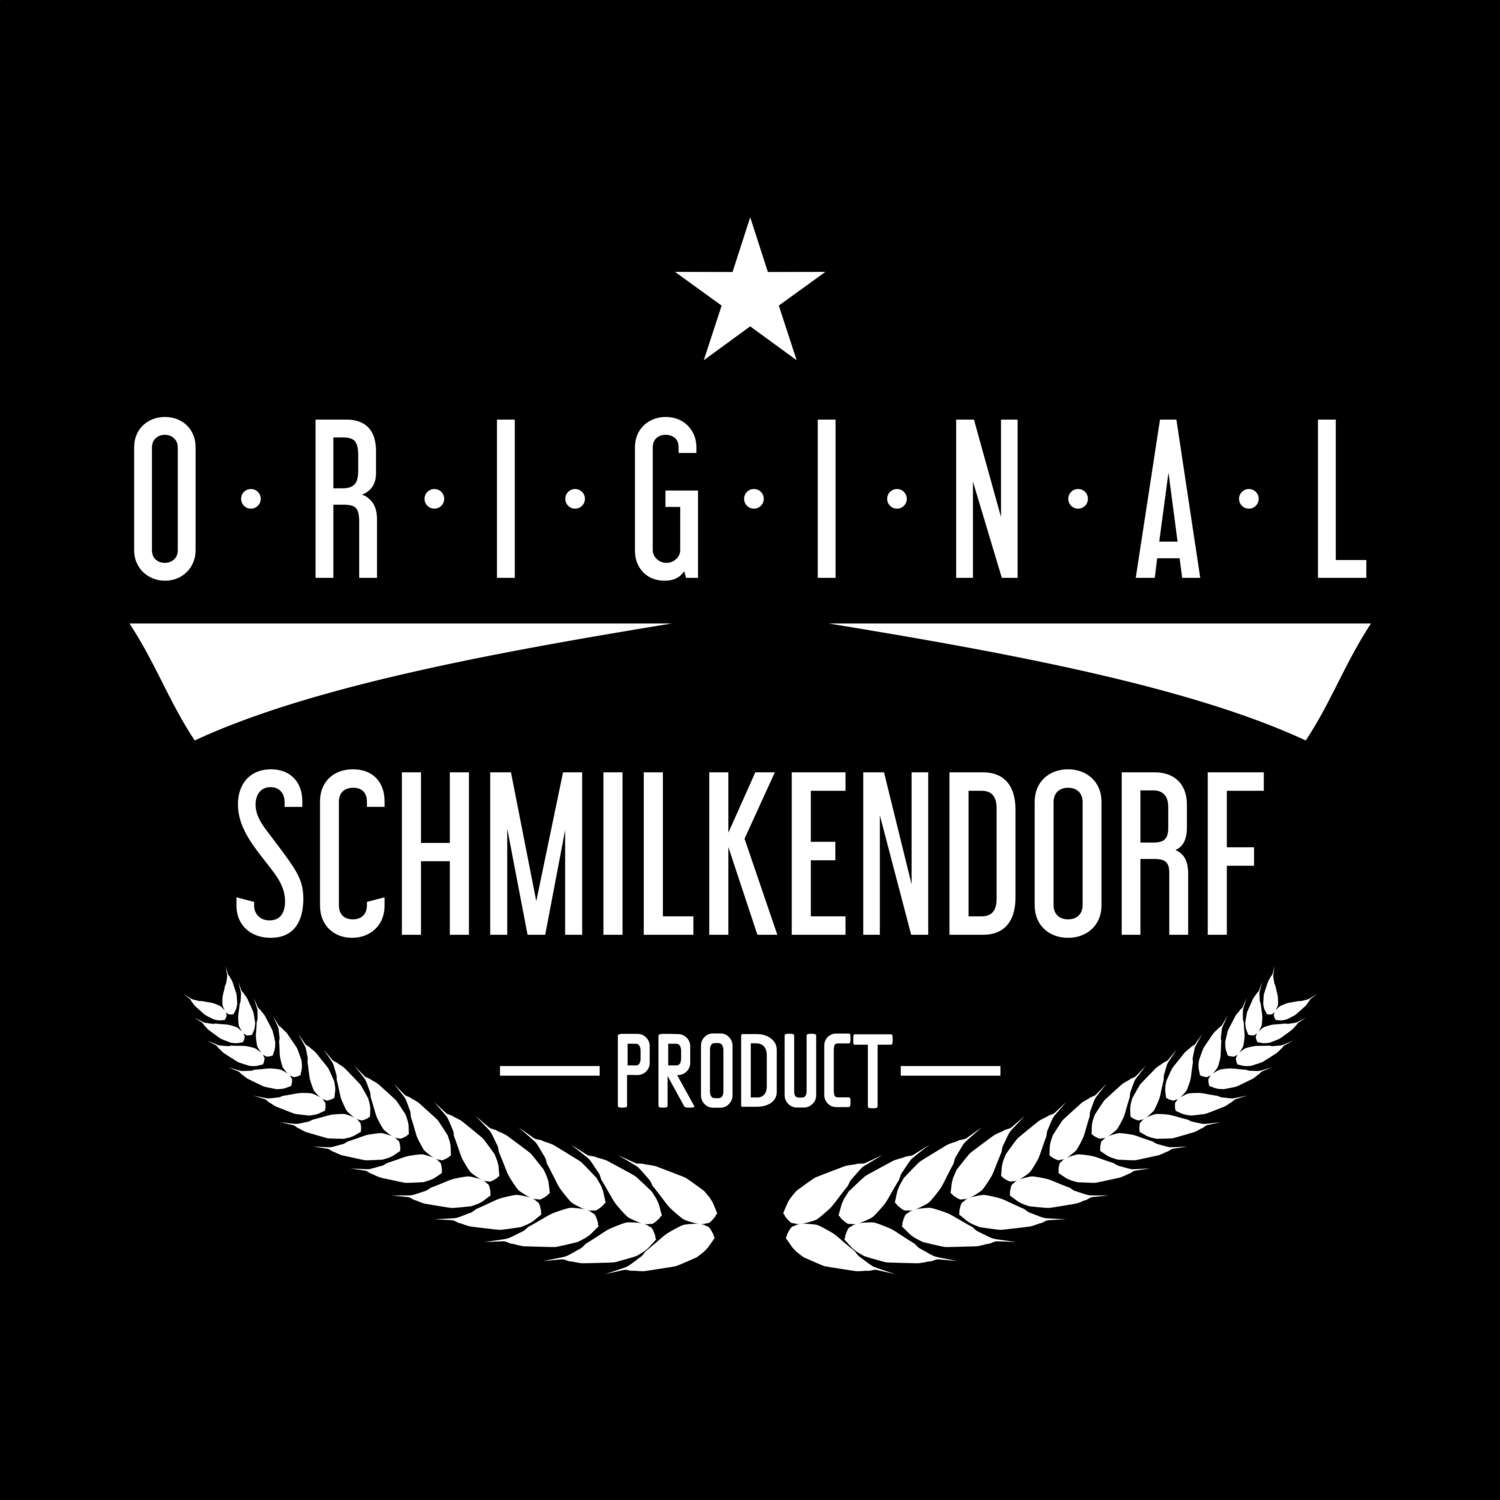 Schmilkendorf T-Shirt »Original Product«